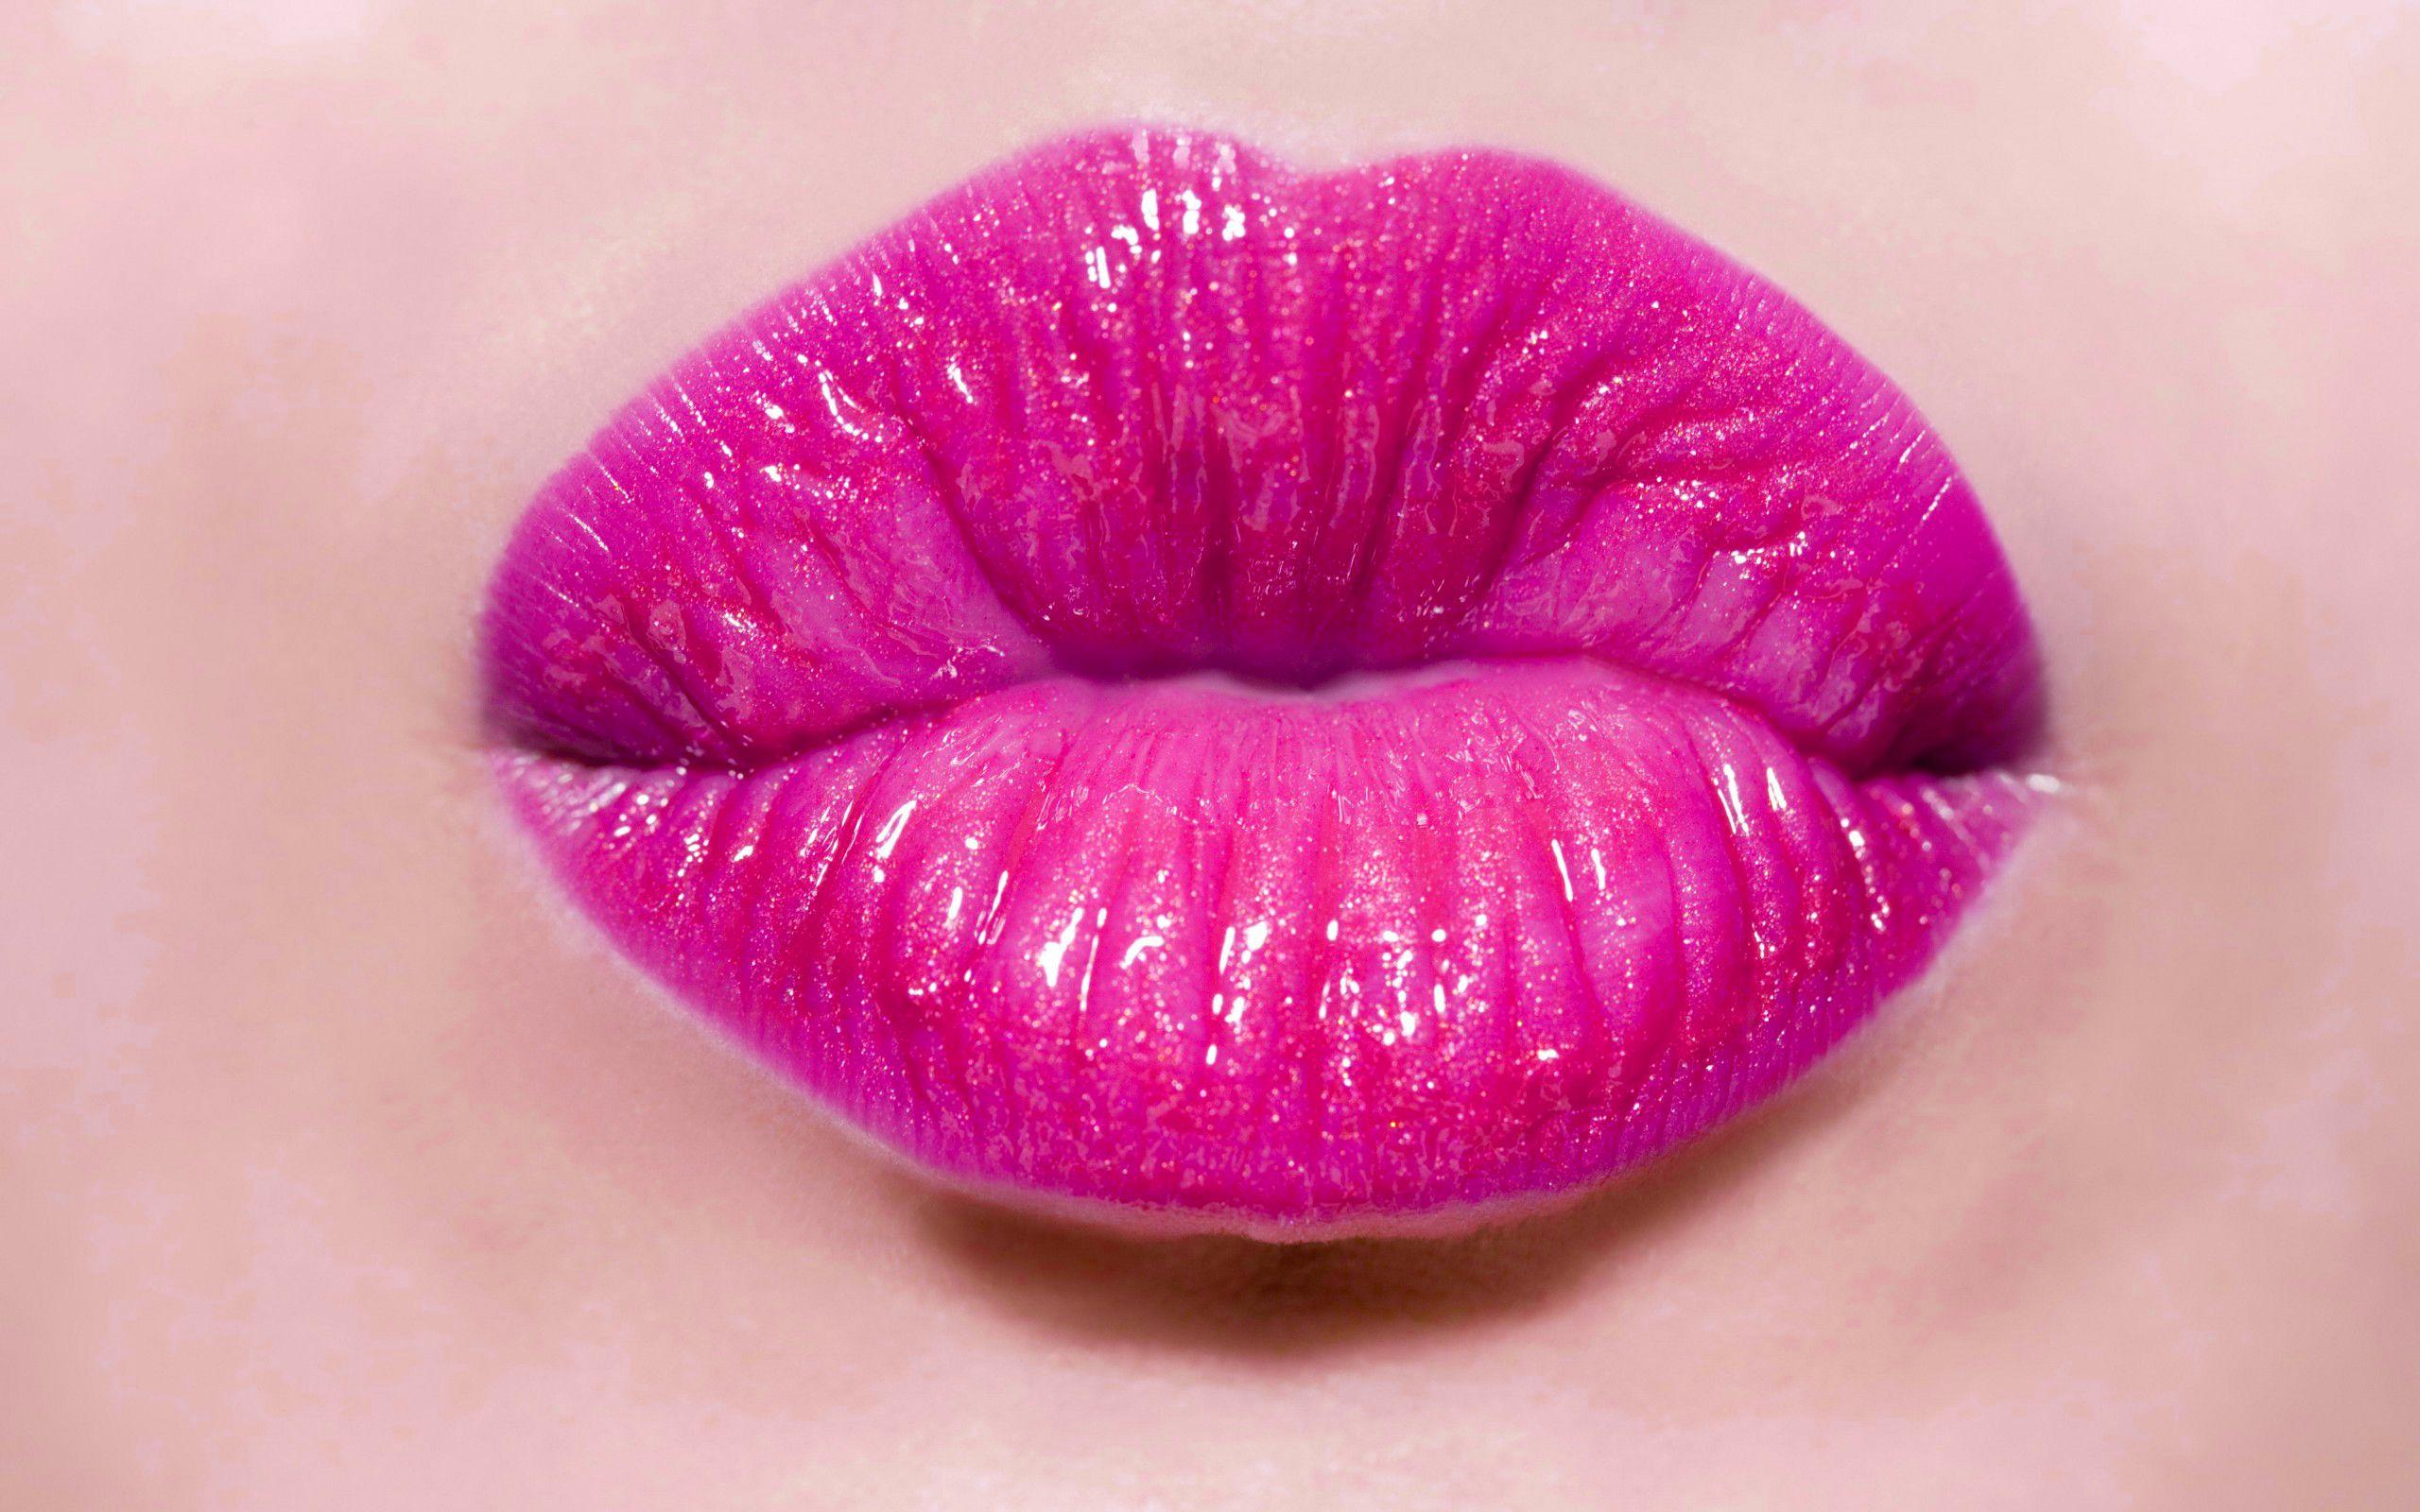 Pink lips kiss